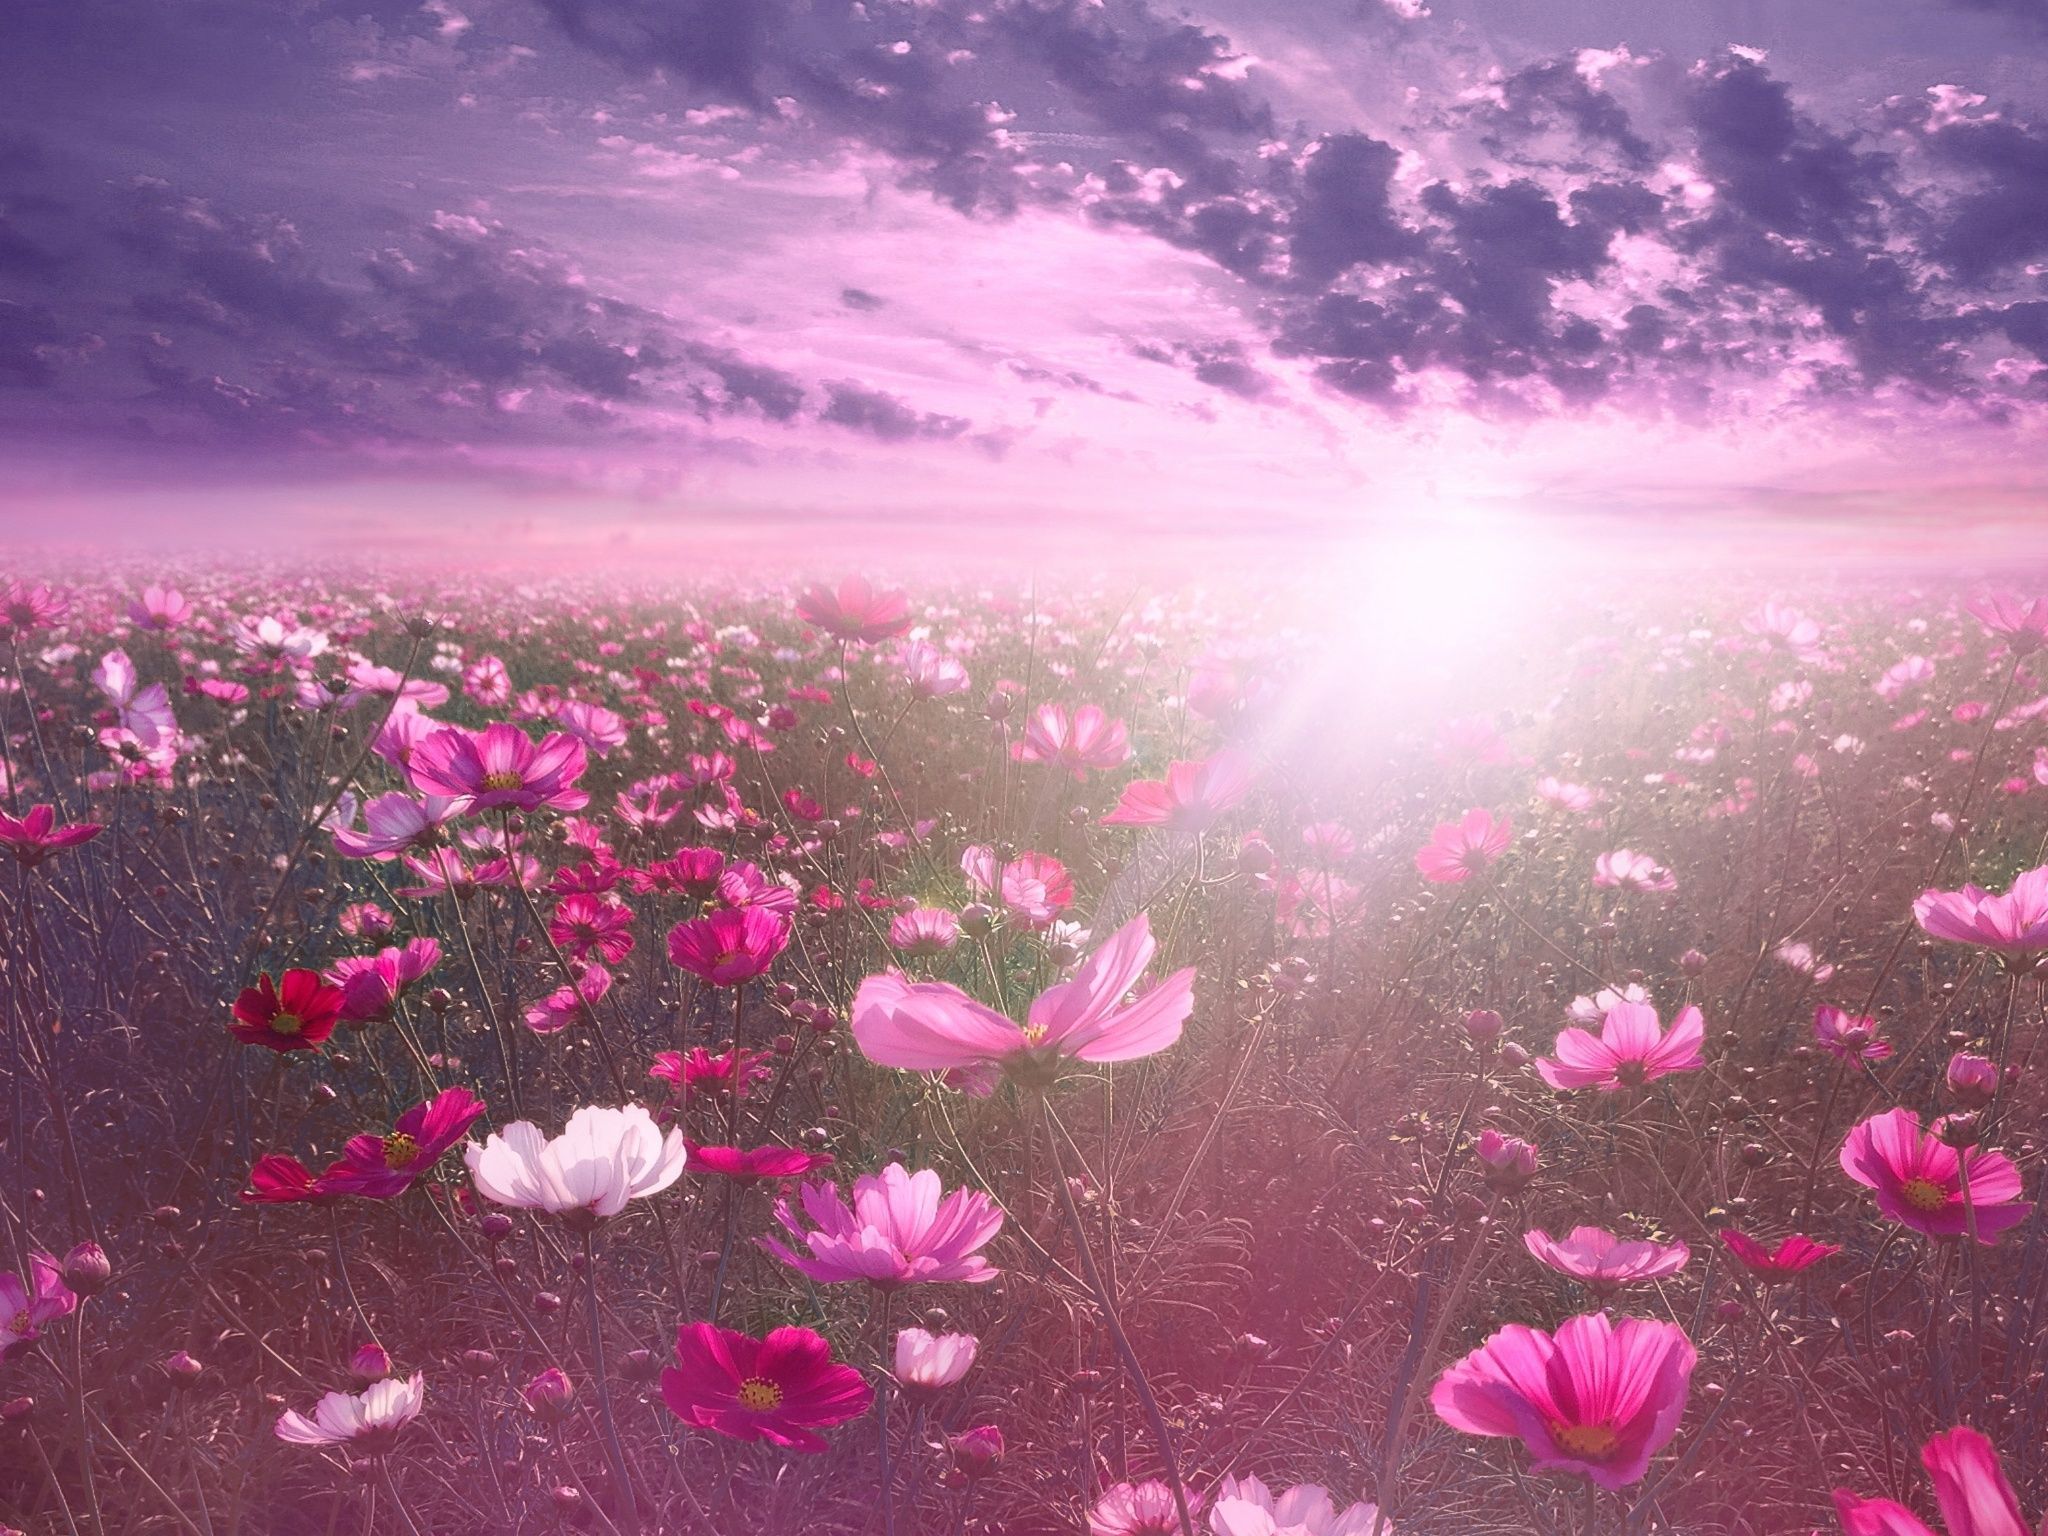 Pink flower Wallpaper 4K, Cosmos, Sunrise, Garden, Sky view